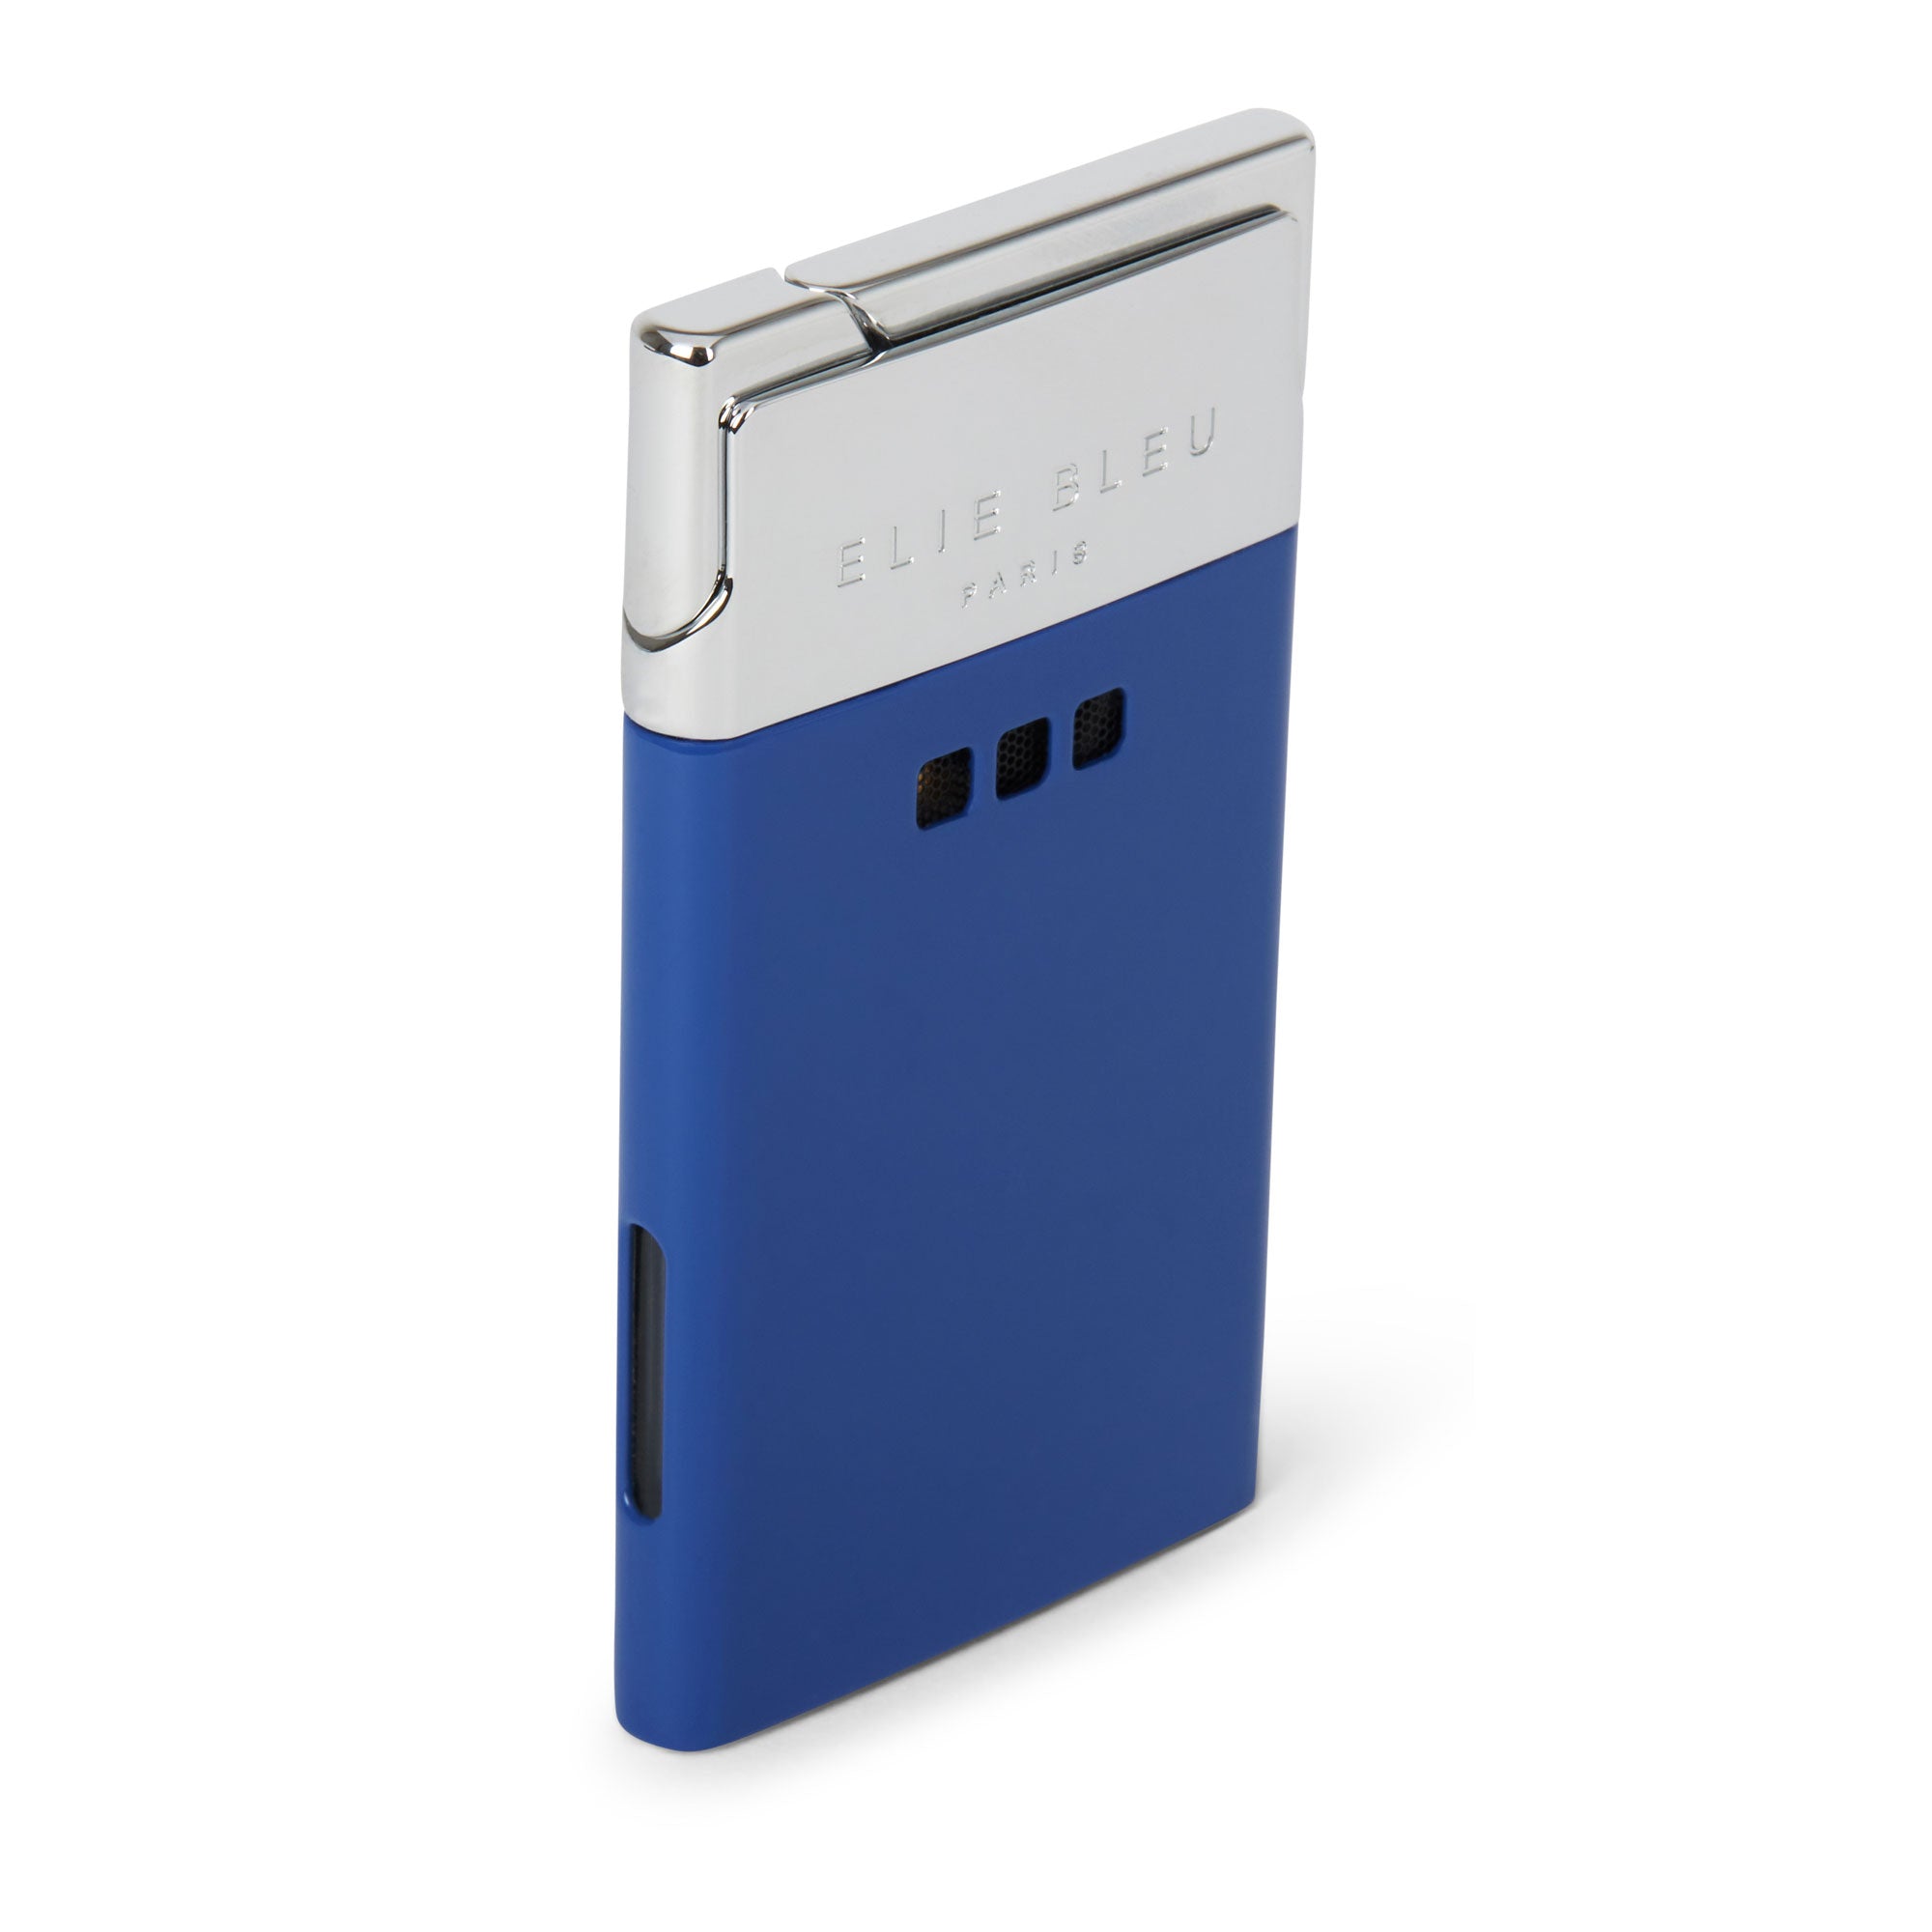 Delgado - Pocket Lighter - E BLUE